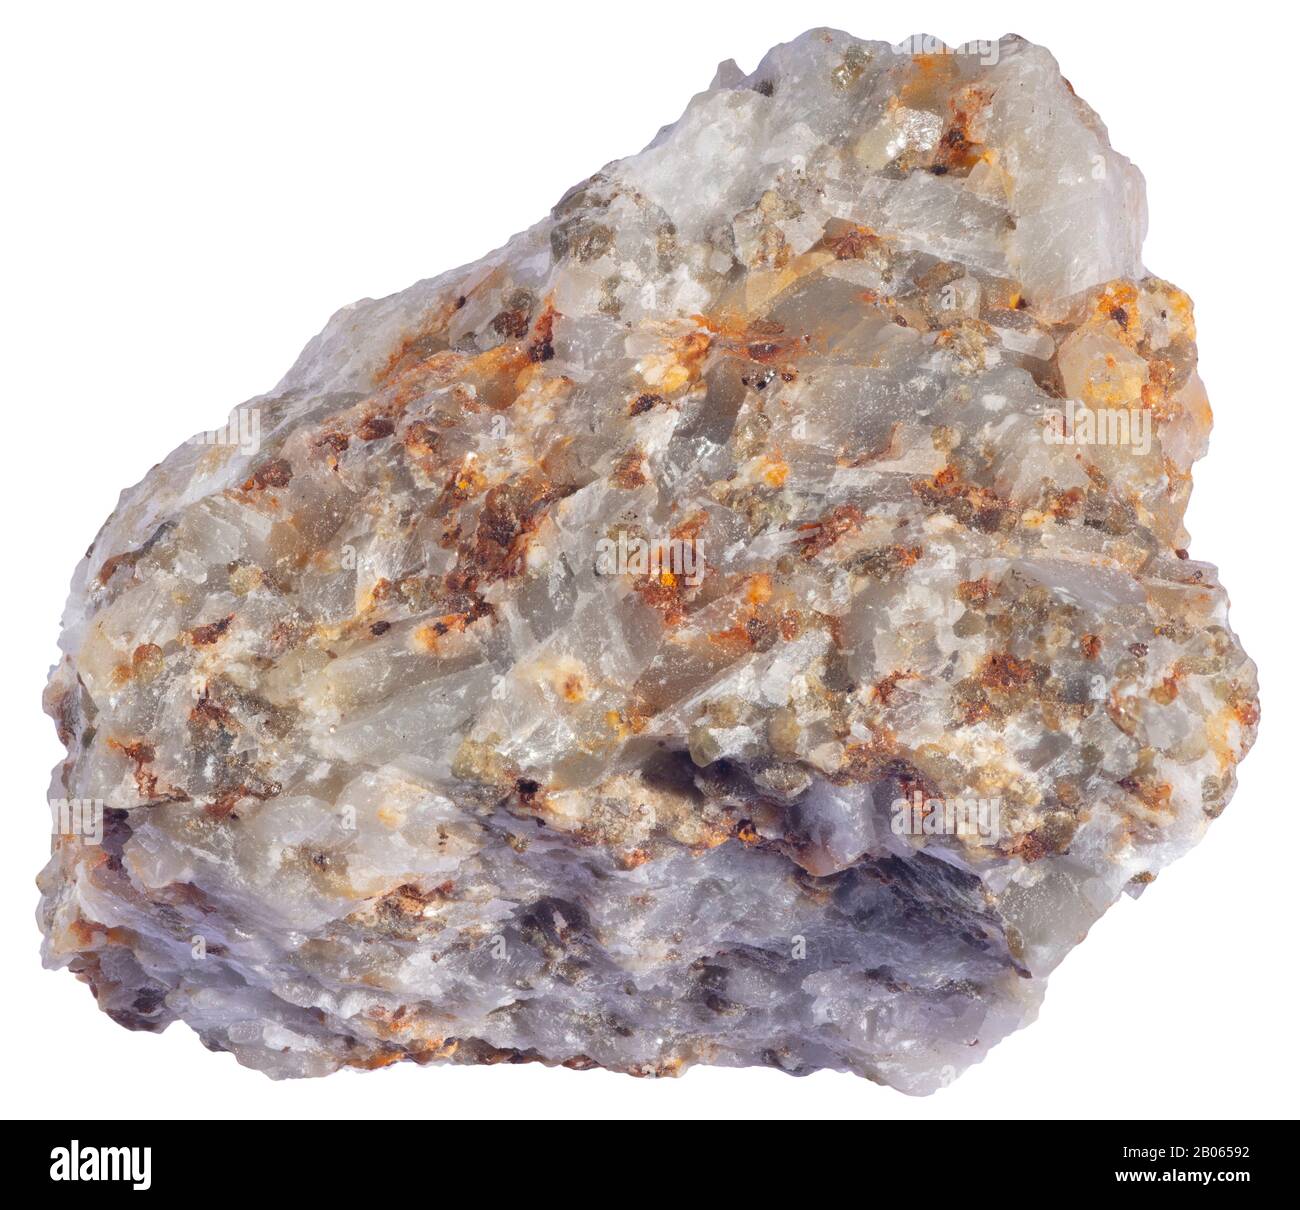 Calciphyre or Metacarbonate Rock, Contact Metamorphism, Grenville, Quebec Stock Photo